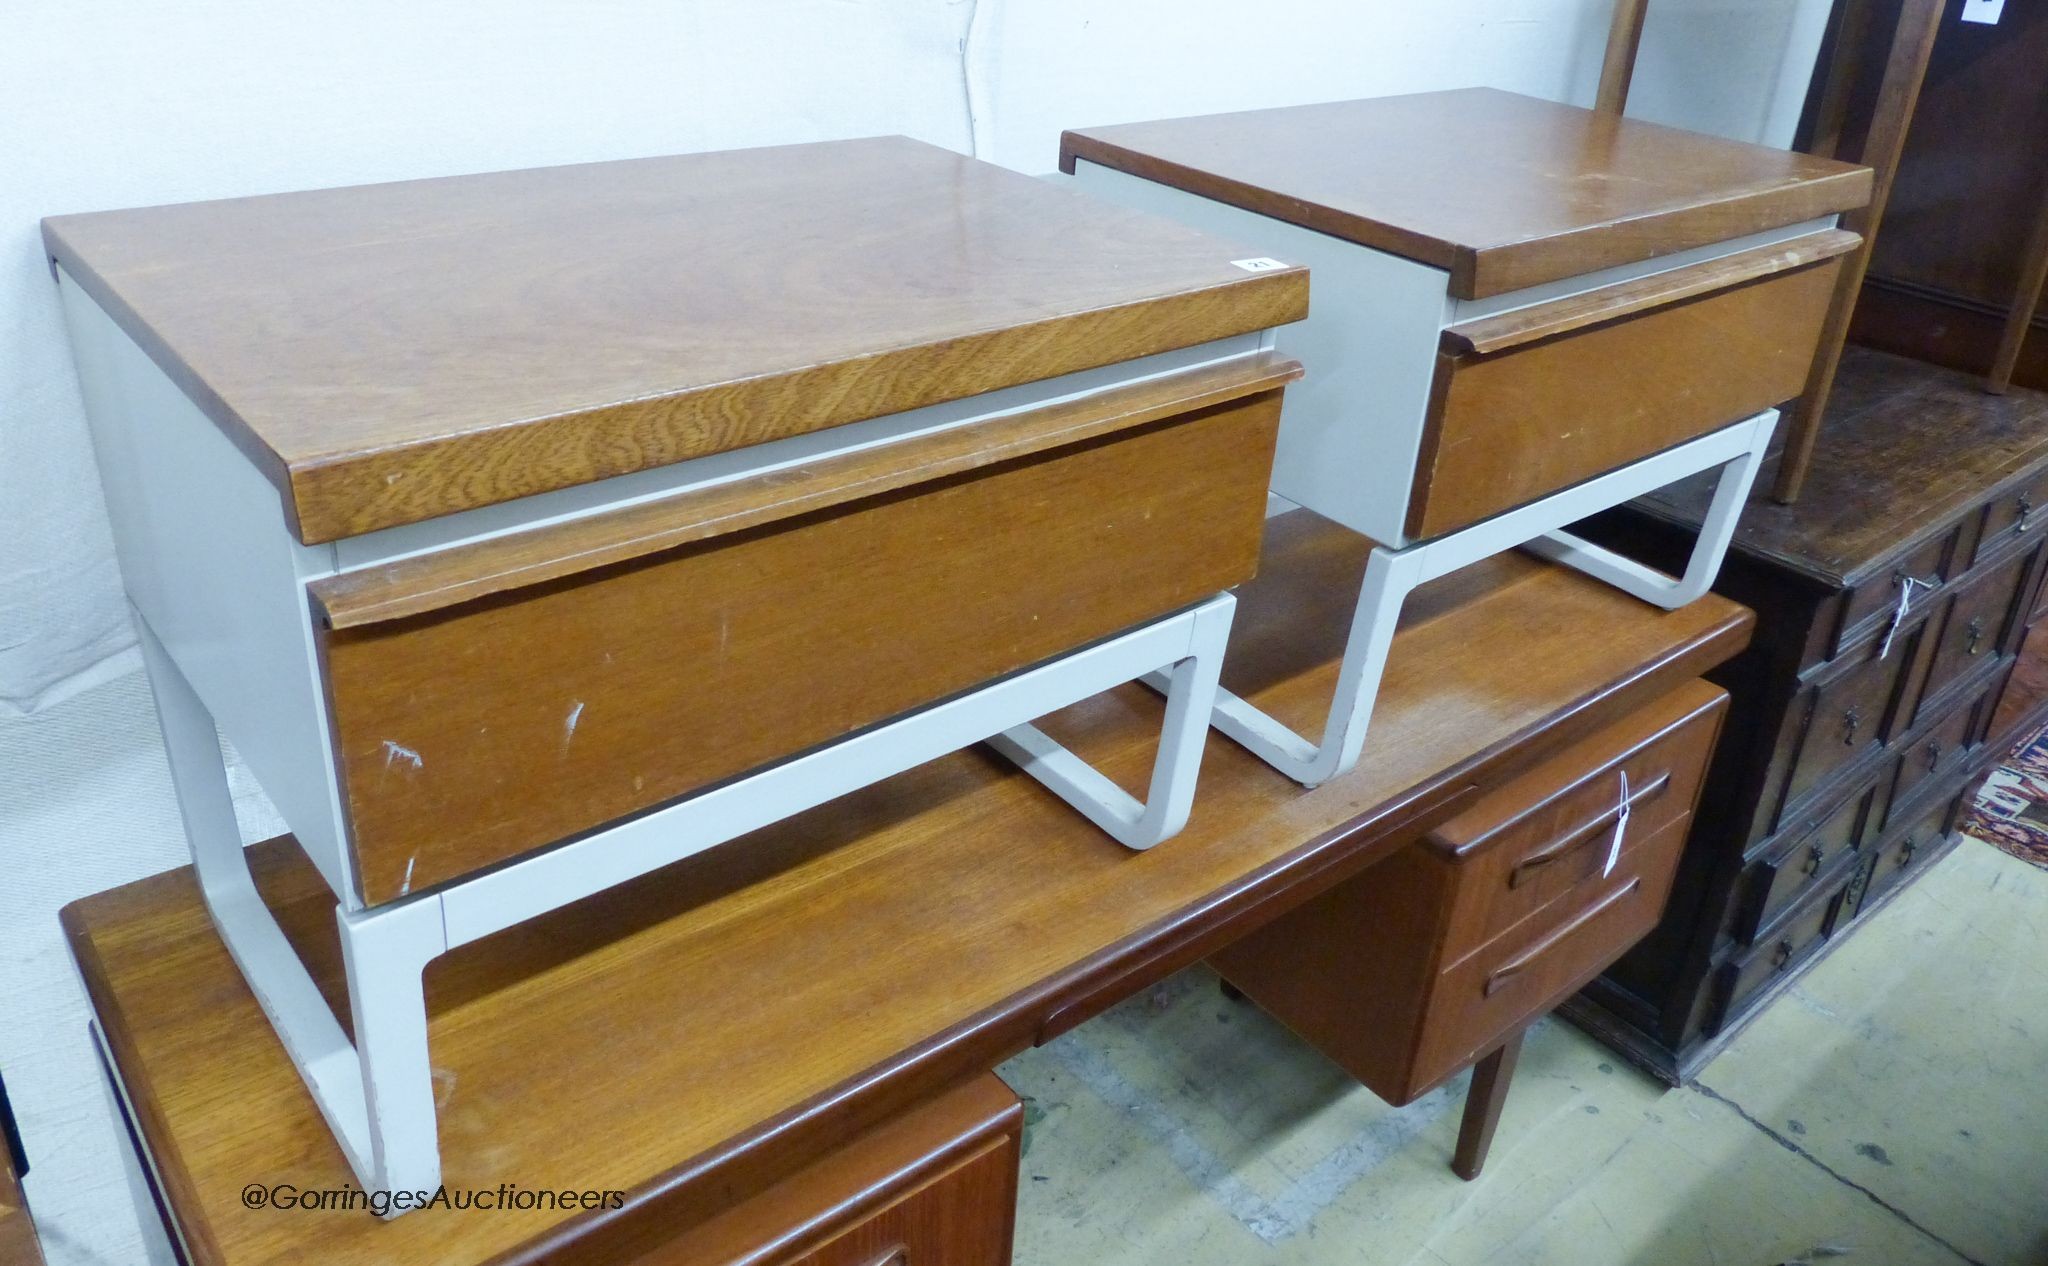 A pair of mid century design teak bedside cabinets, width 61cm, depth 44cm, height 48cm